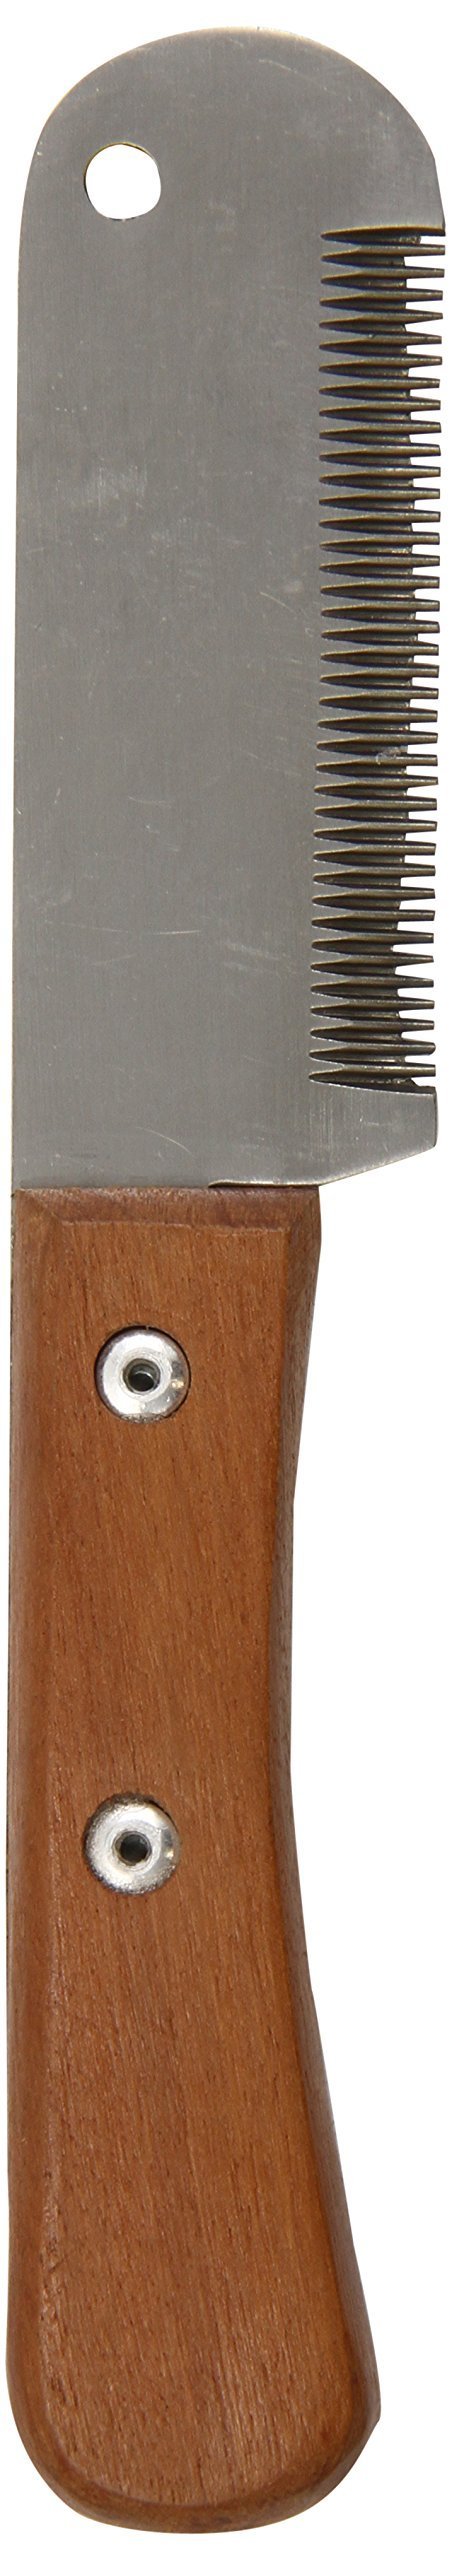 [Australia] - Tamsco 6-Inch Stripping Knife, Wooden Handle Medium Teeth, 3-Inch Blade, Hardened Stainless Steel 